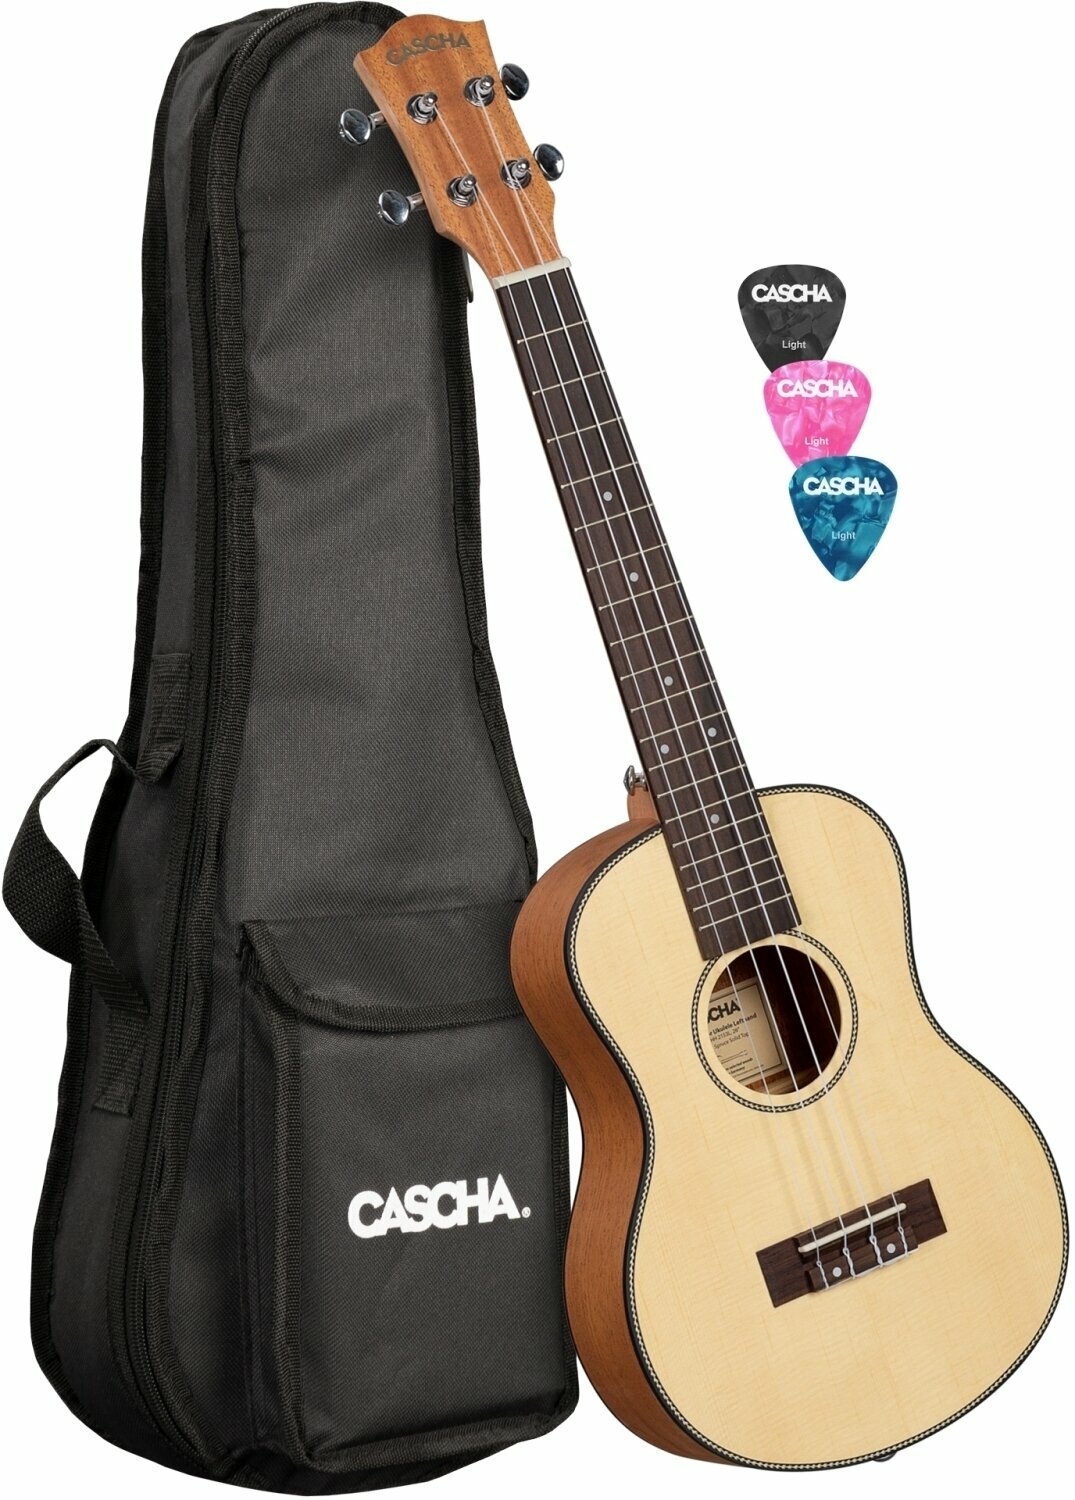 Tenor ukulele Cascha HH 2154L Tenor ukulele Natural